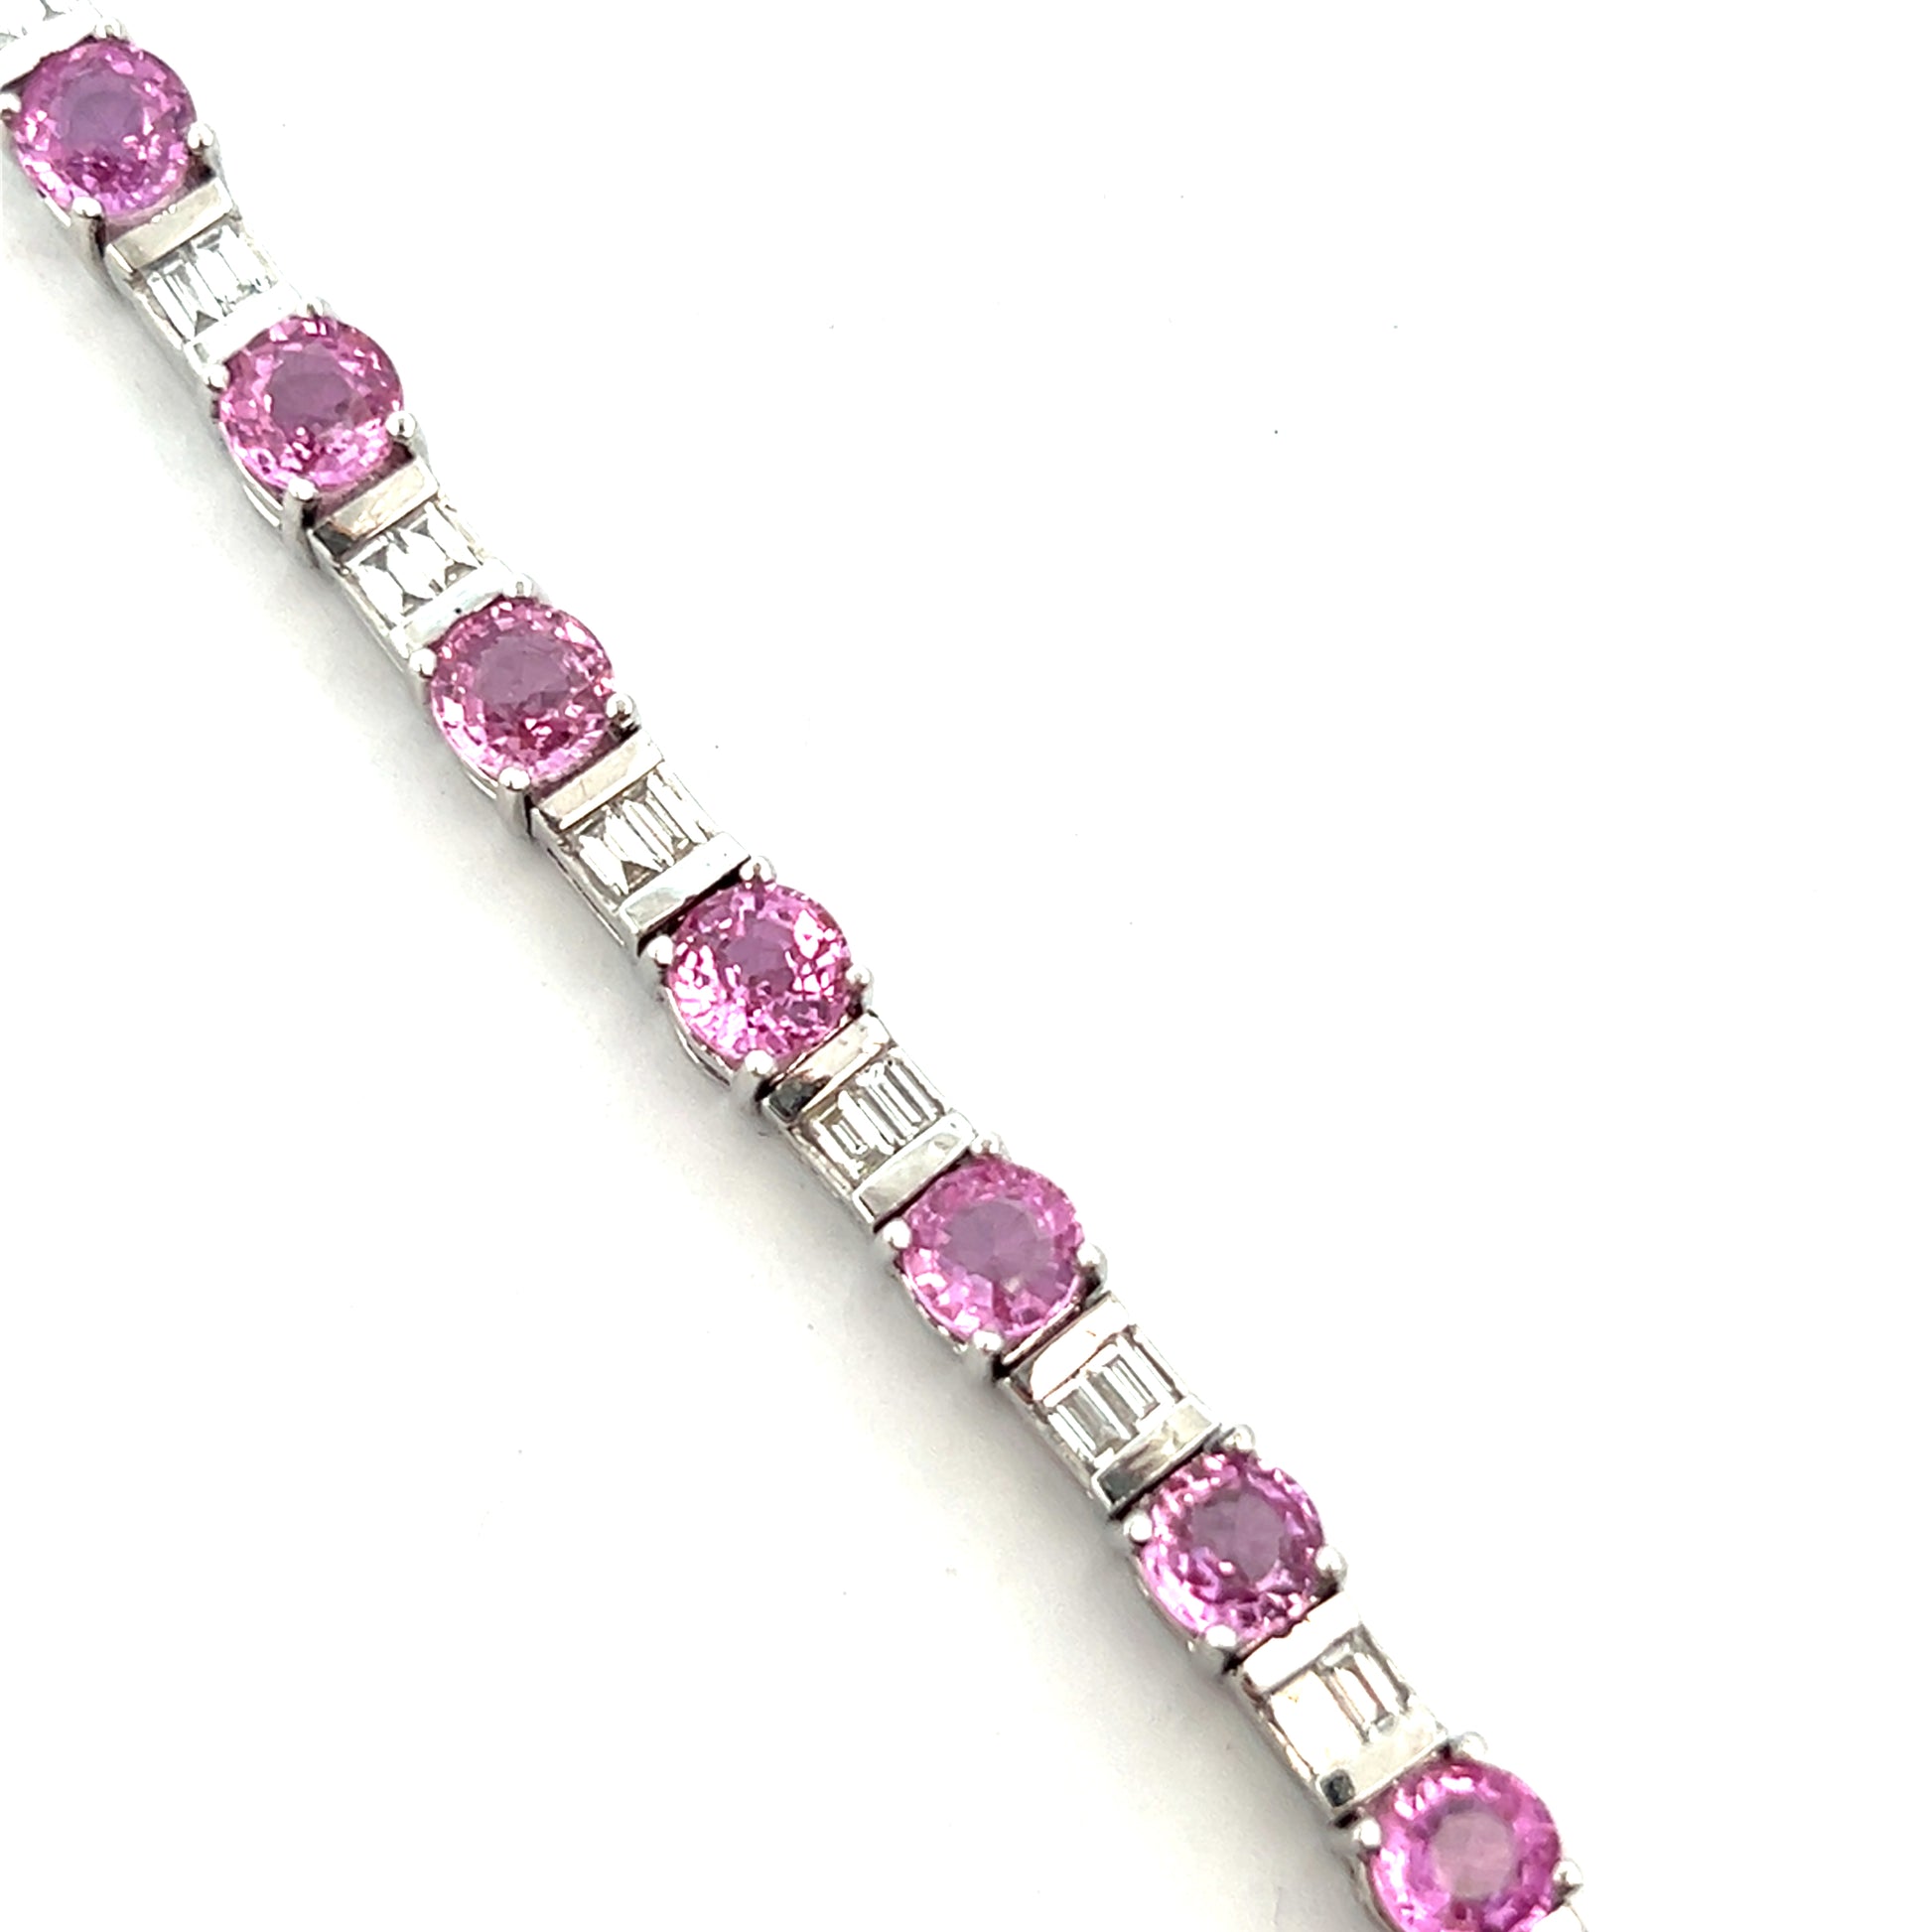 11.95cttw Sapphire and Diamond Bracelet | Pink Sapphire Bracelet